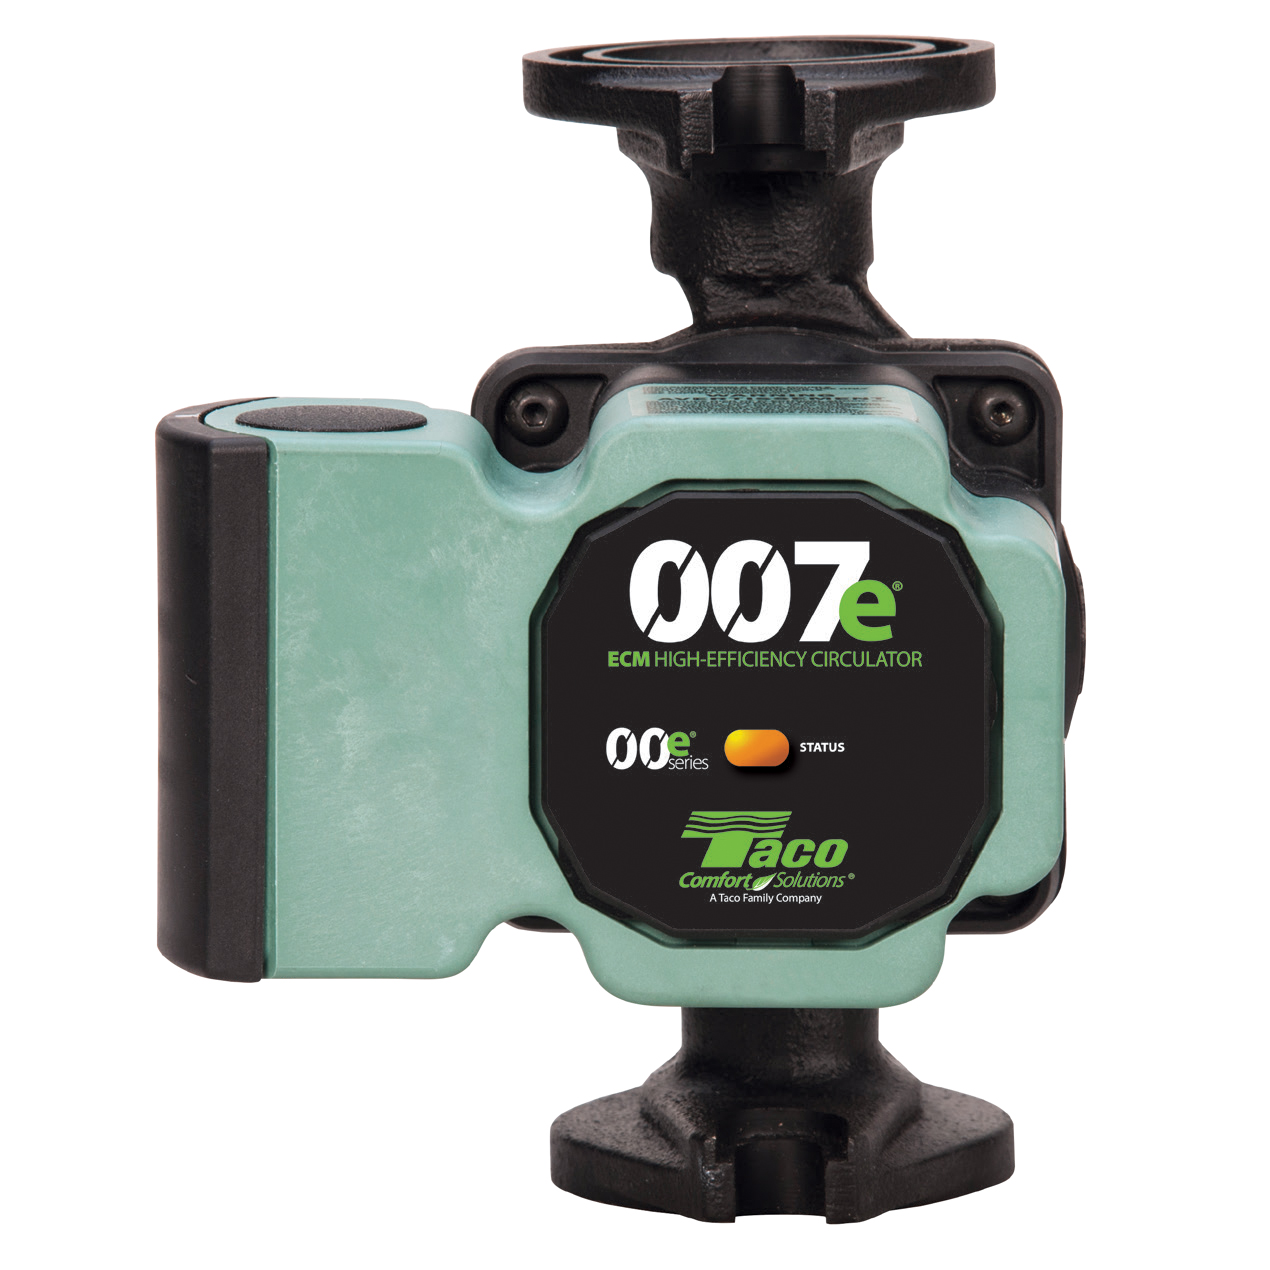 007e-2F2 007e® ECM High-Efficiency Circulator, Standard Flange, Cast Iron